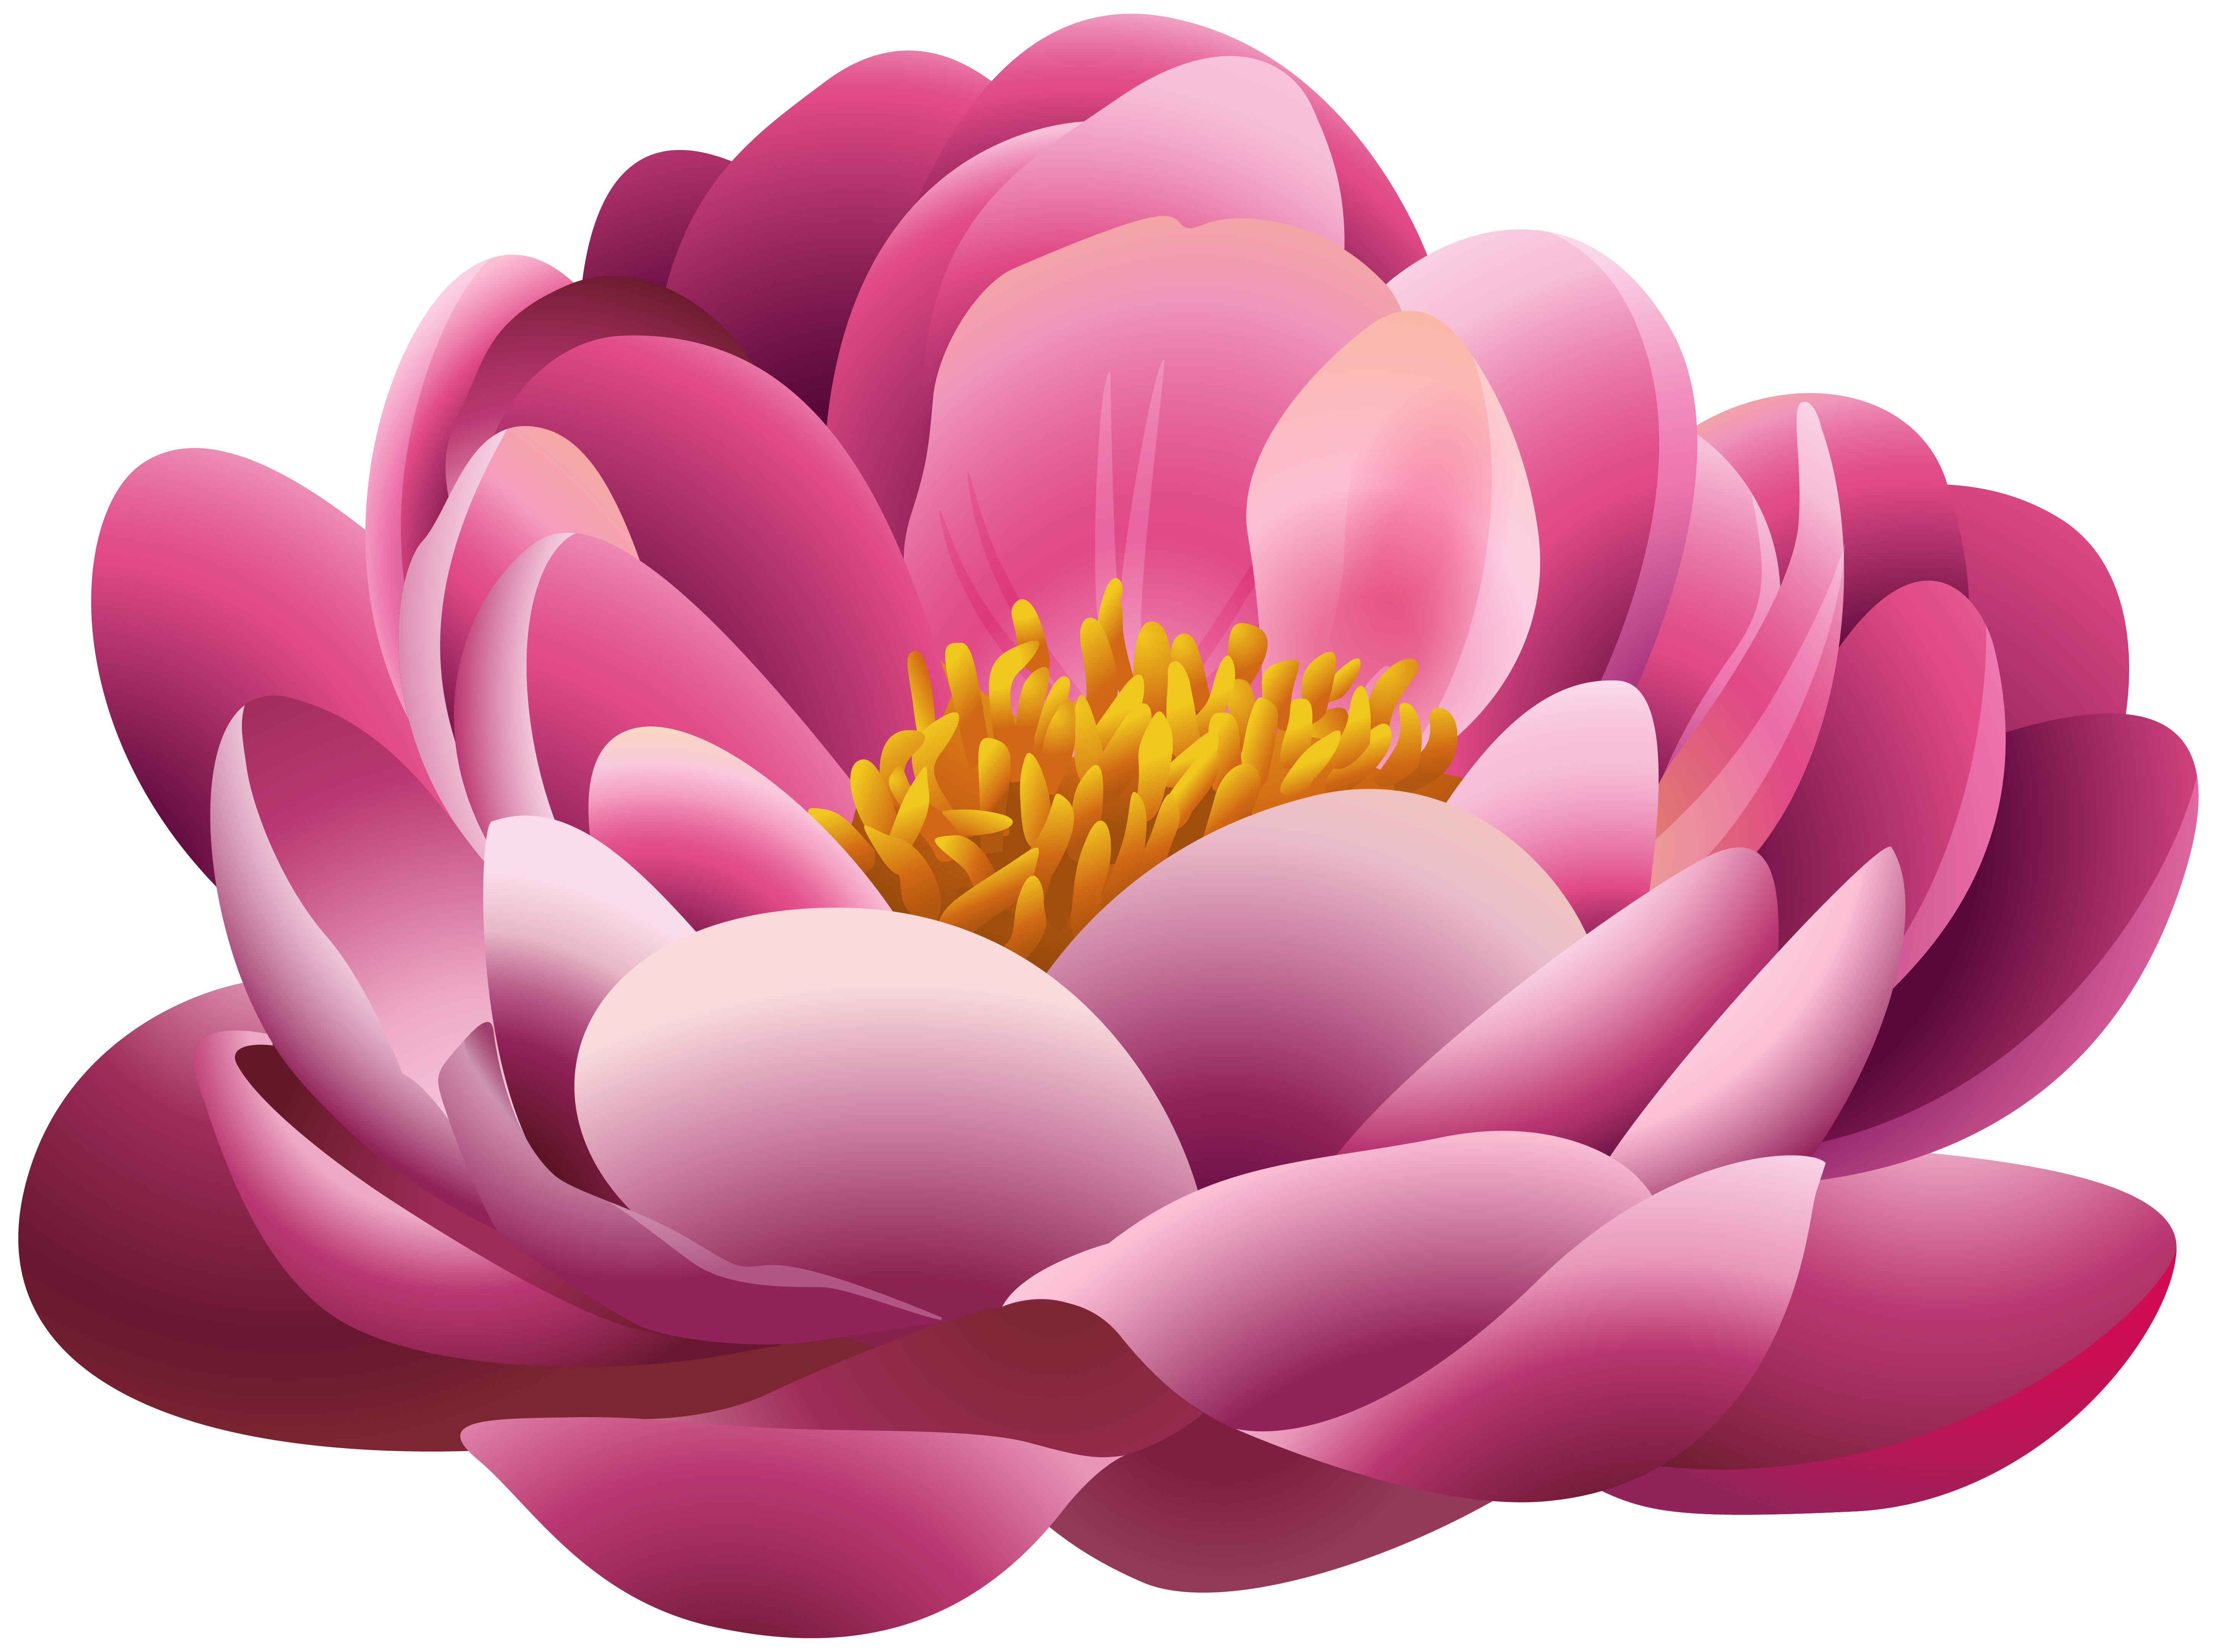 Beautiful pink flower.